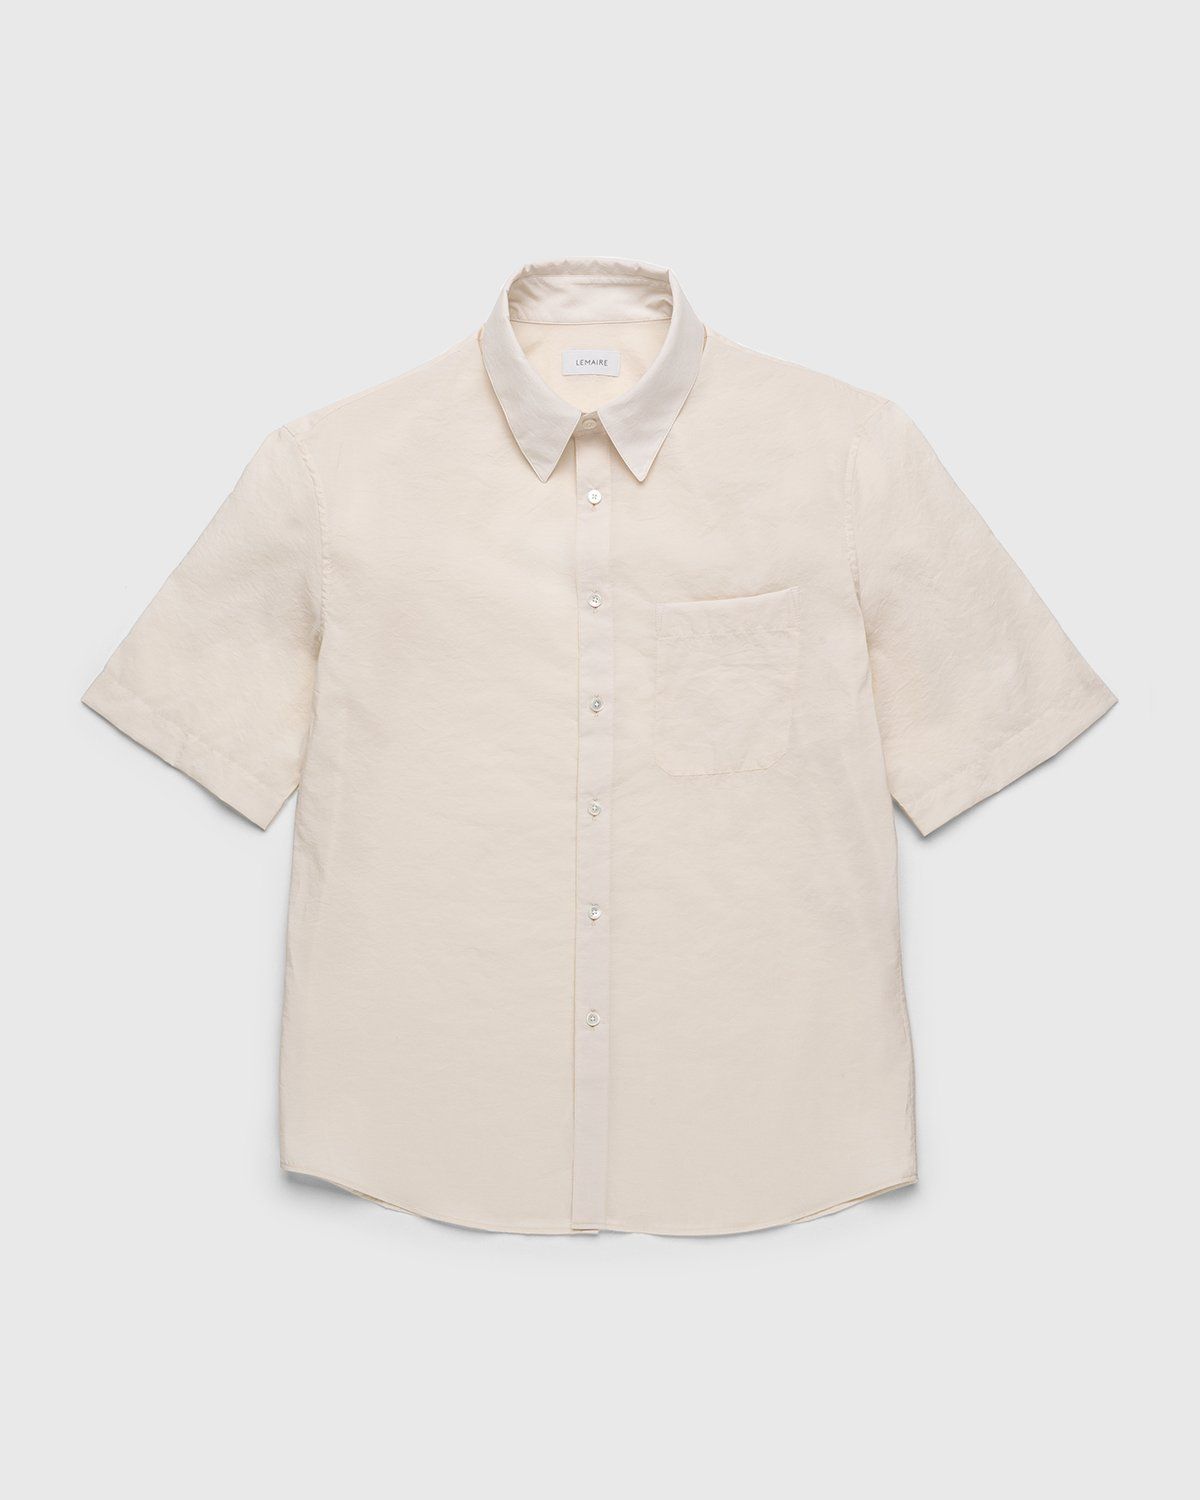 Lemaire – Regular Collar Short Sleeve Shirt Ivory